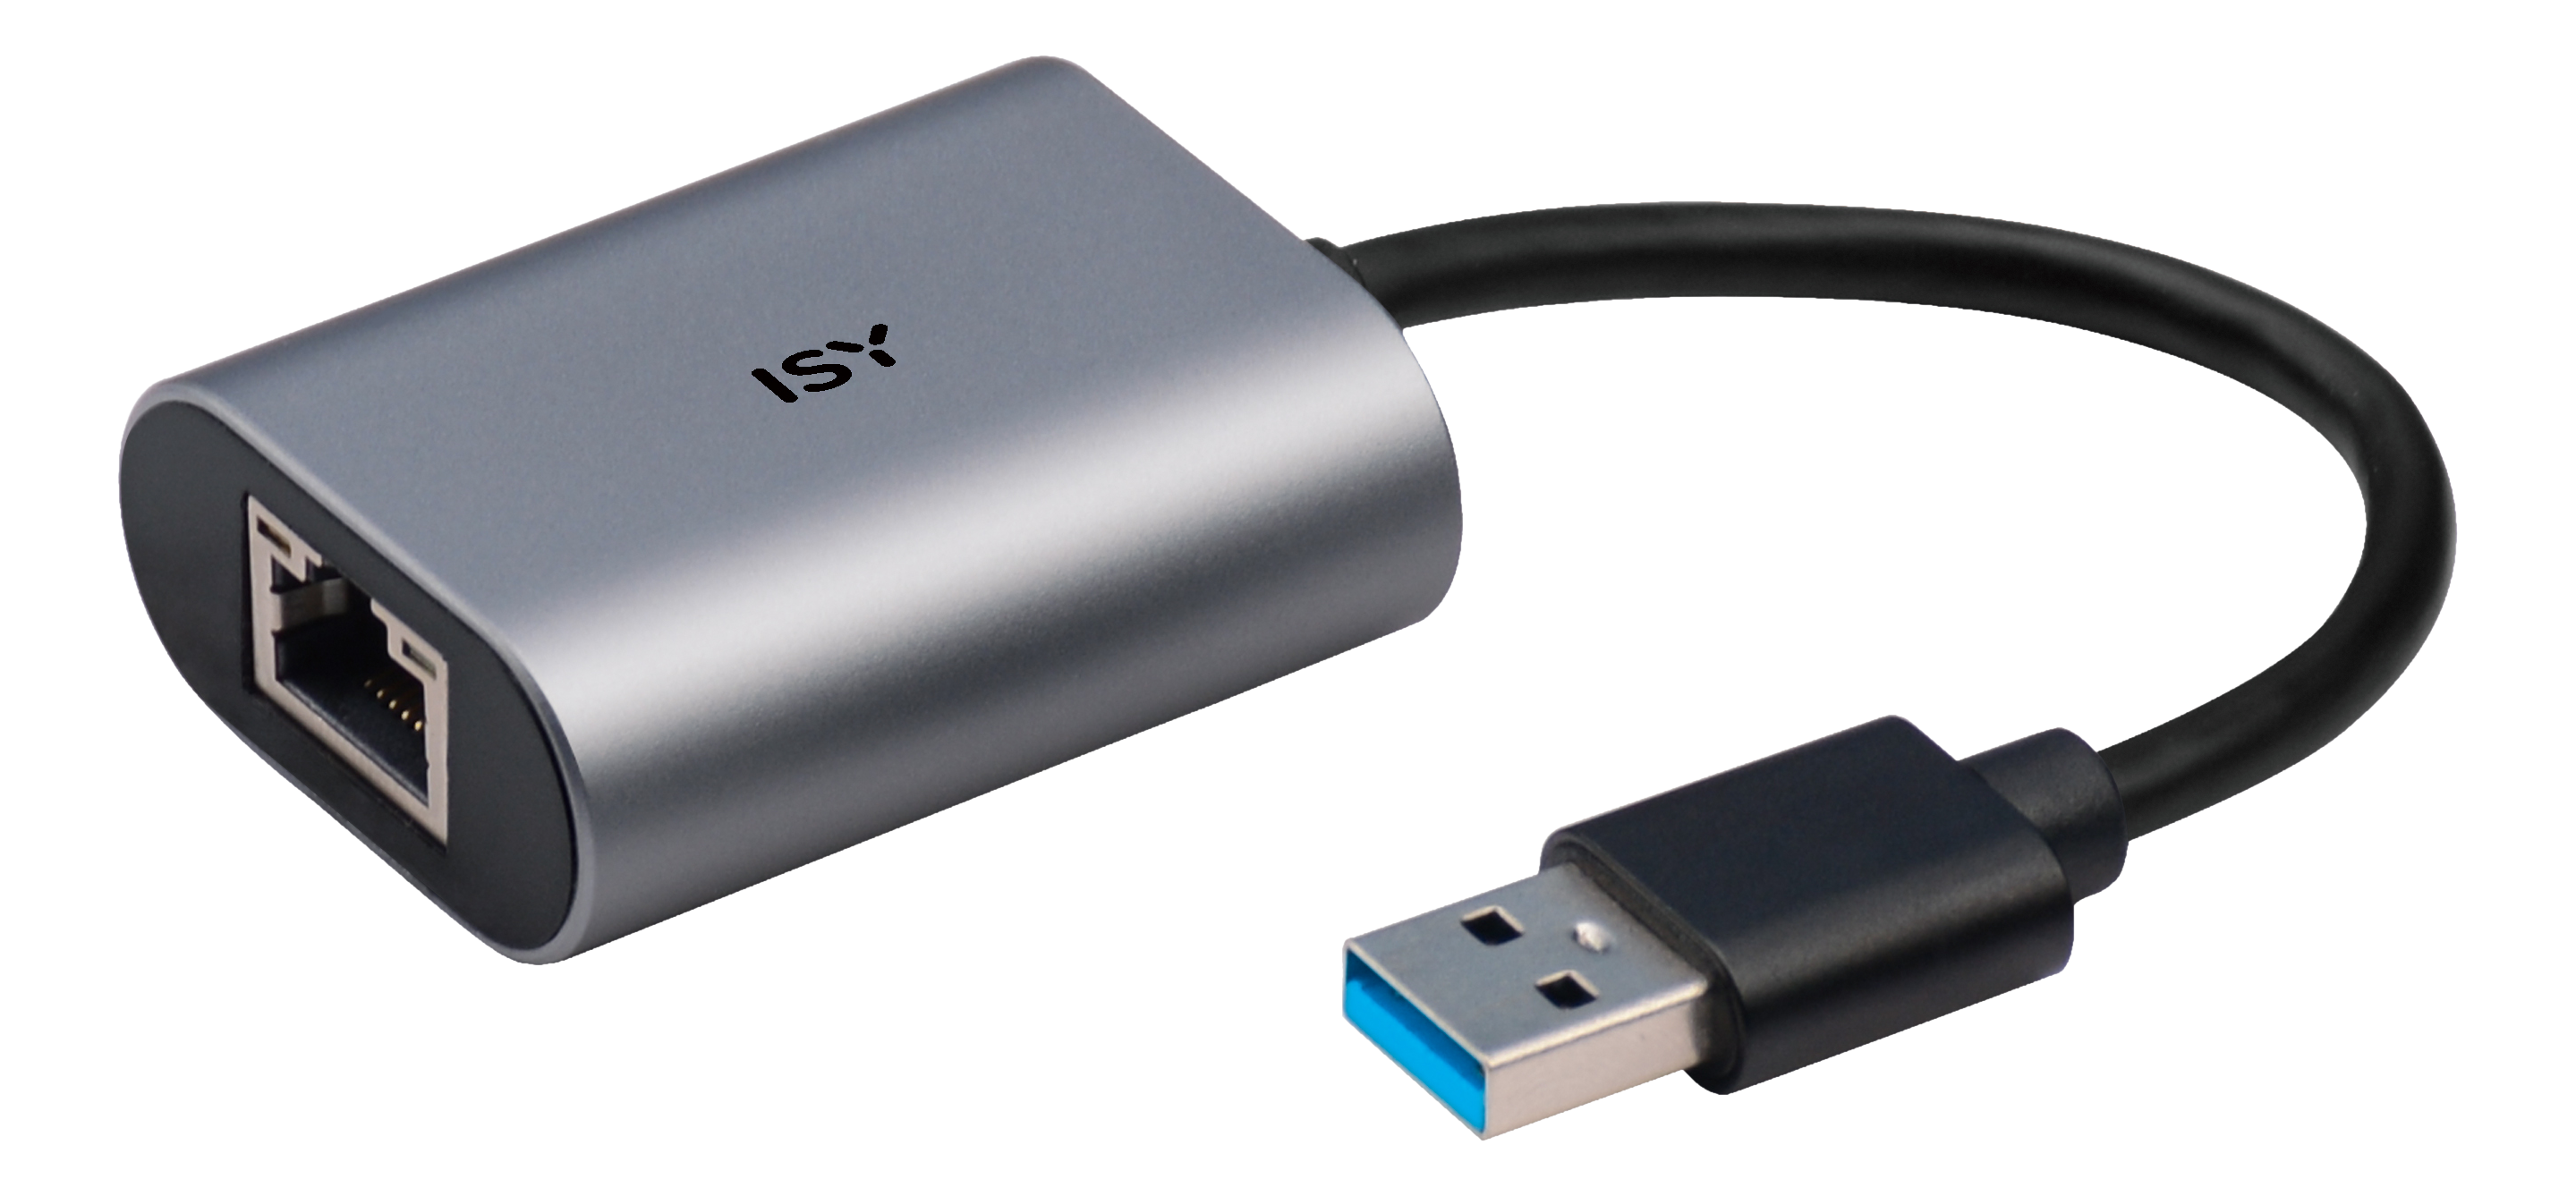 ISY IAD-1010-A - Adattatore USB-A, 15 cm, 1 Gbit/s, Nero/Argento